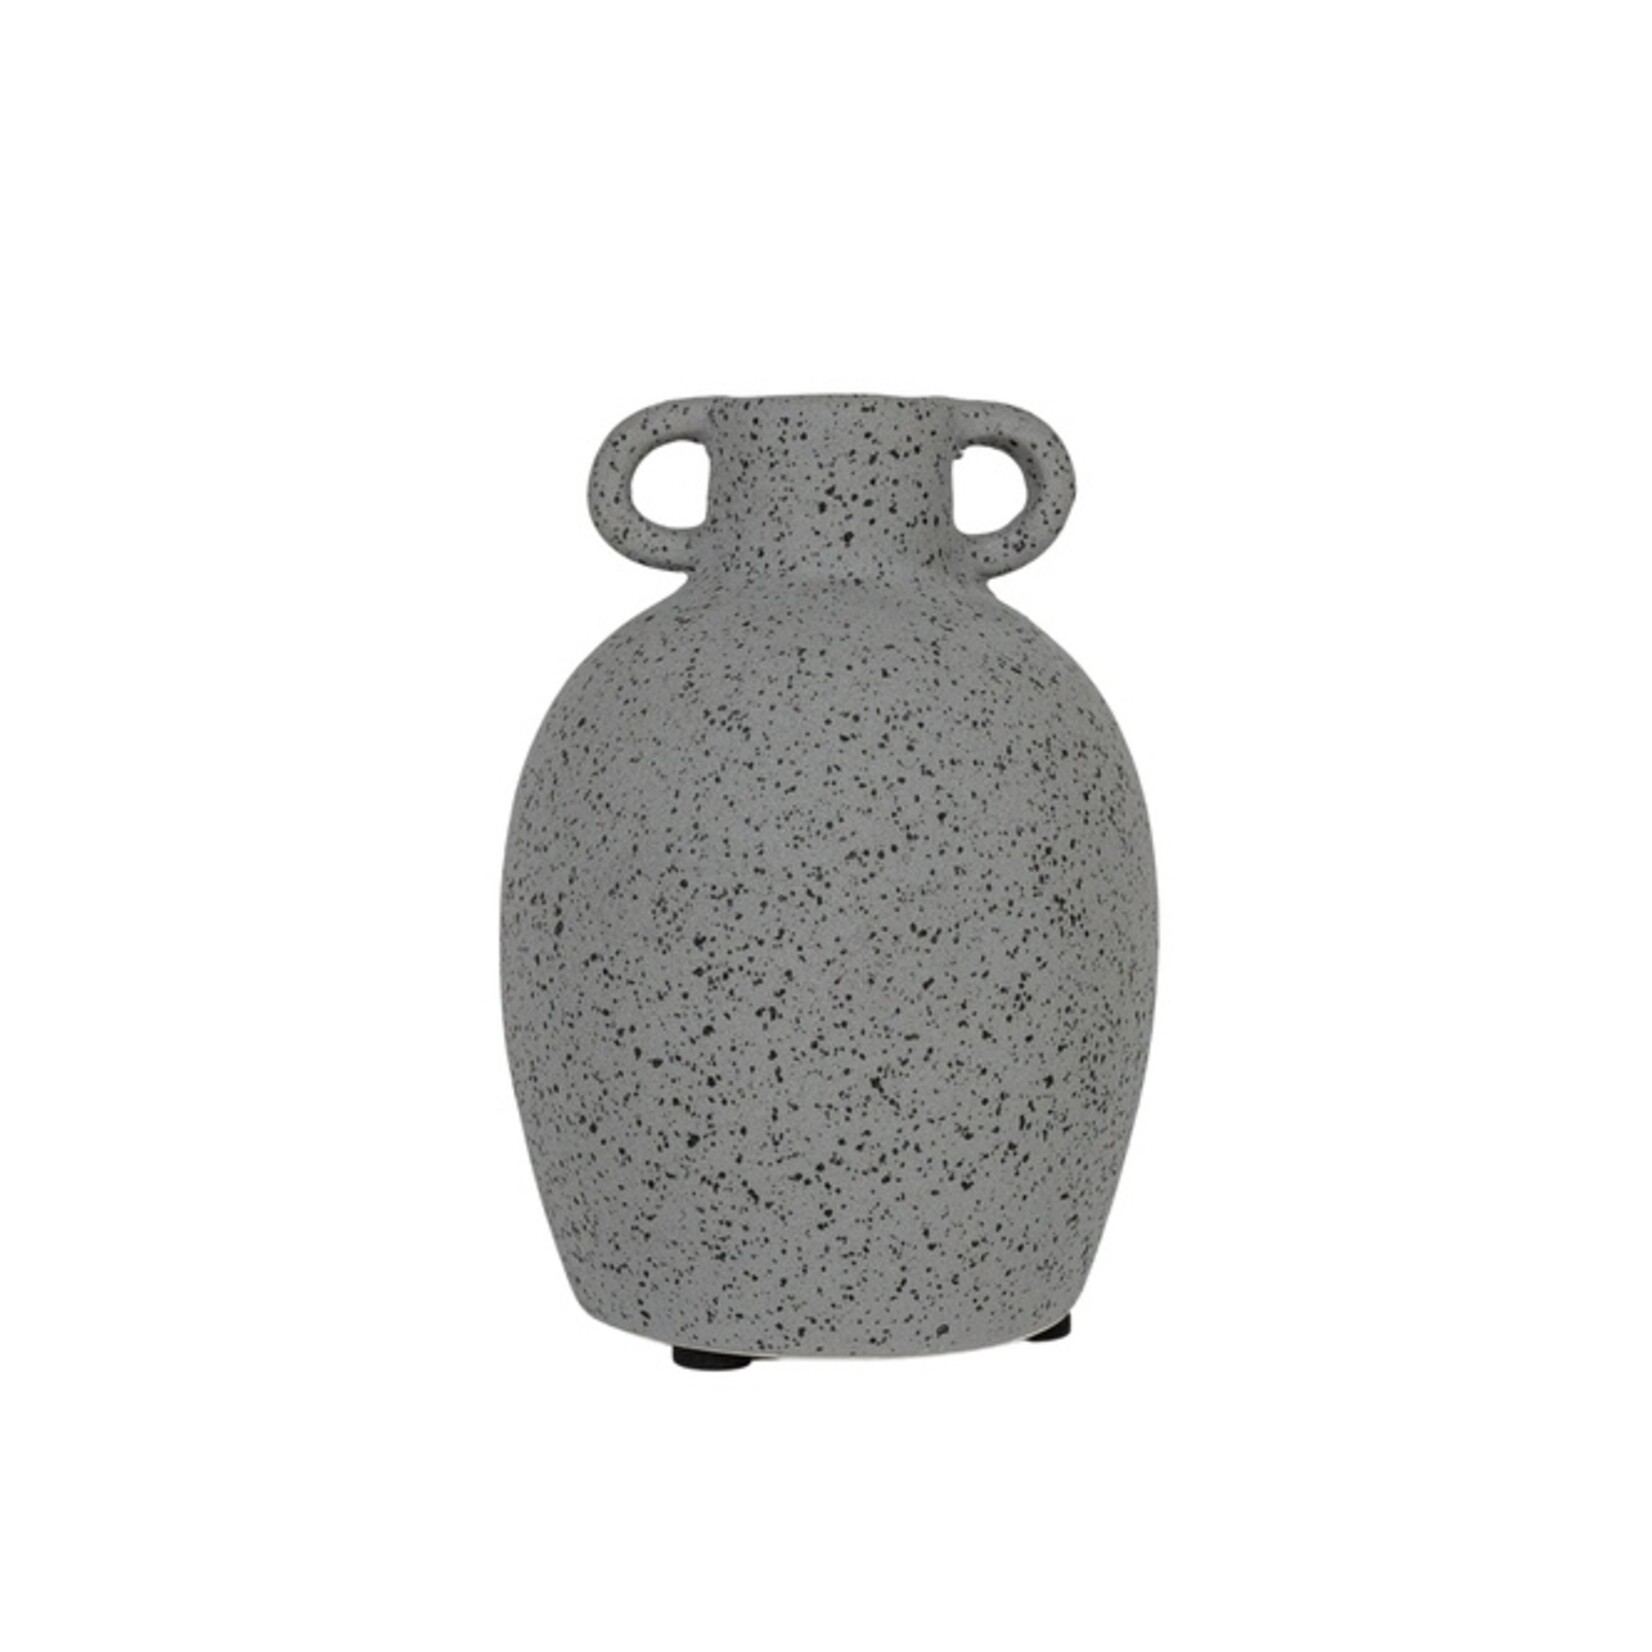 Speckled Stoneware Vase